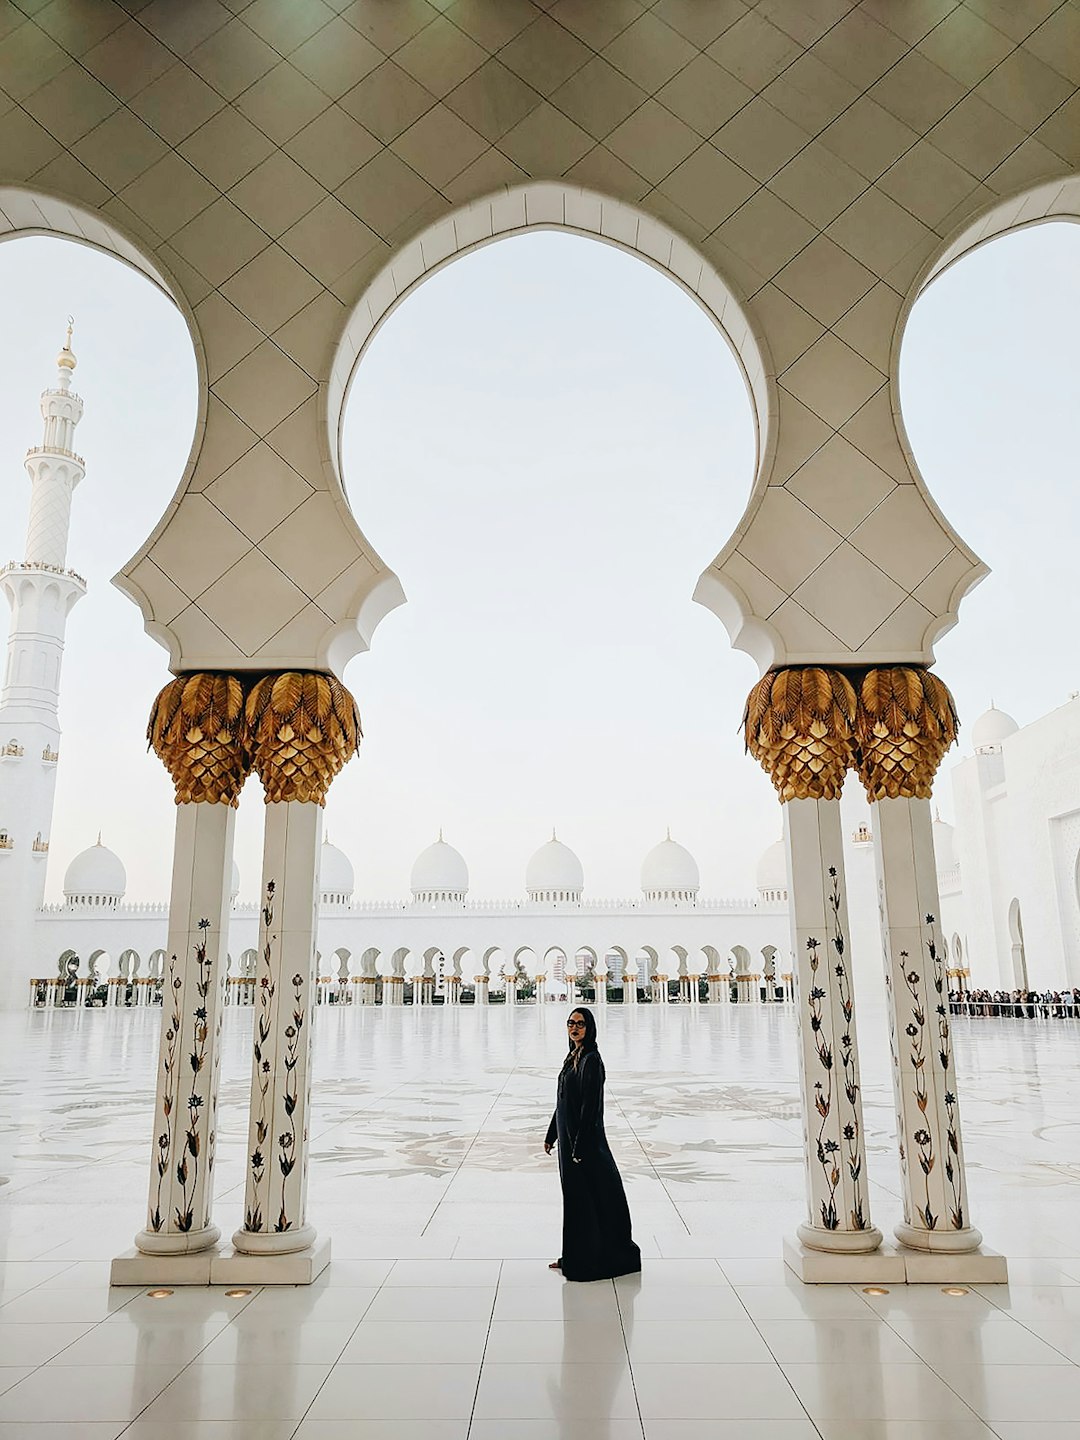 Mosque photo spot Abu Dhabi Abu Dhabi - United Arab Emirates